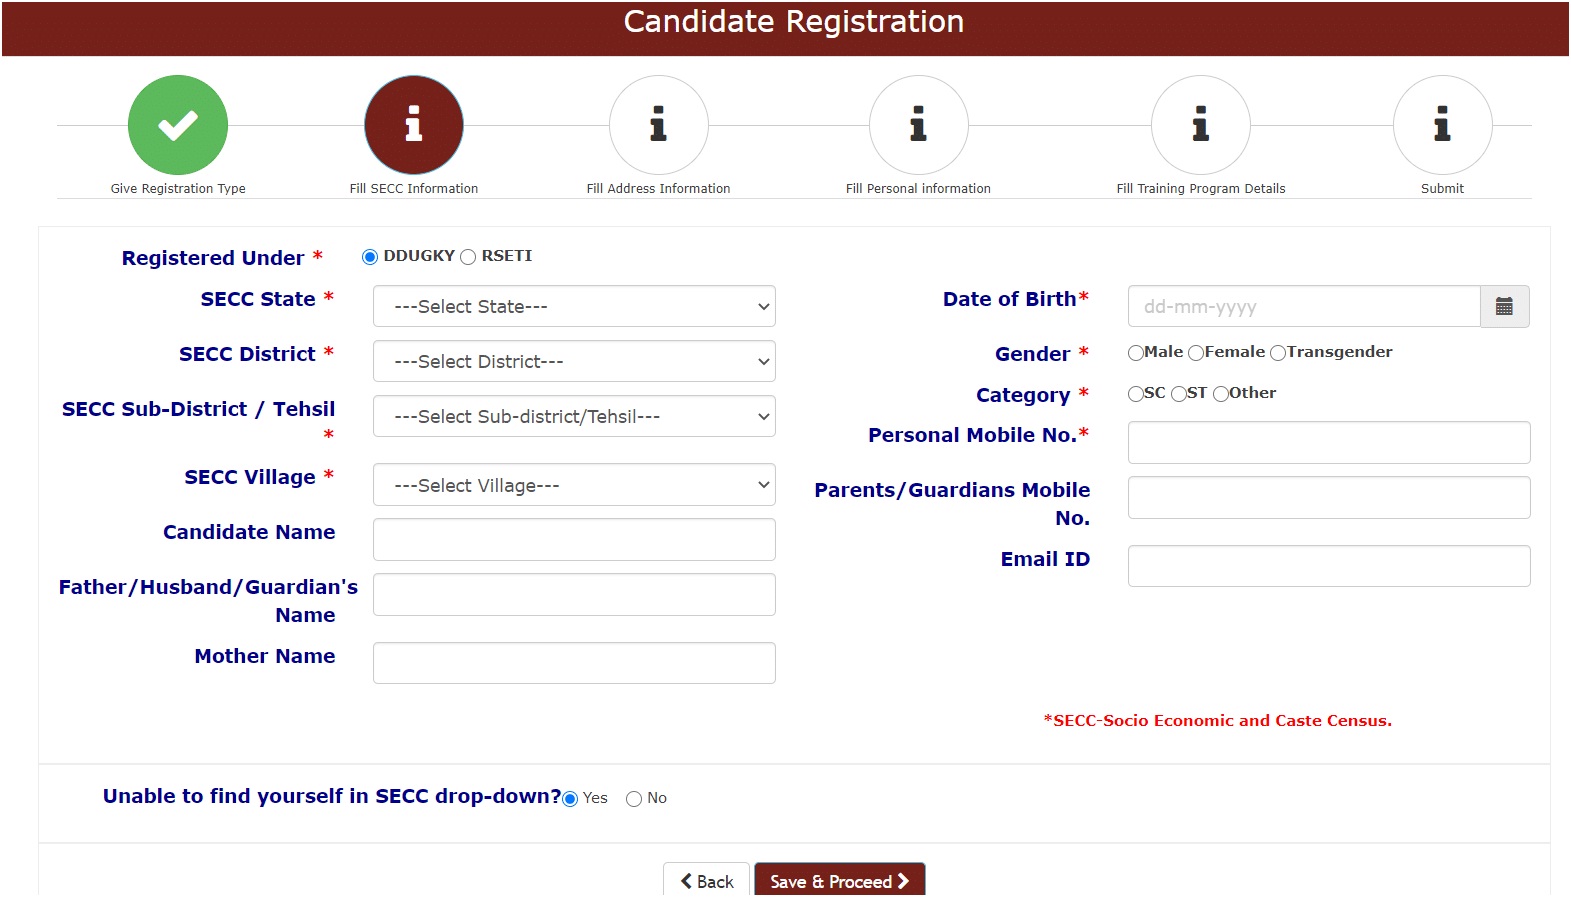 kaushal panjee online skill registration form